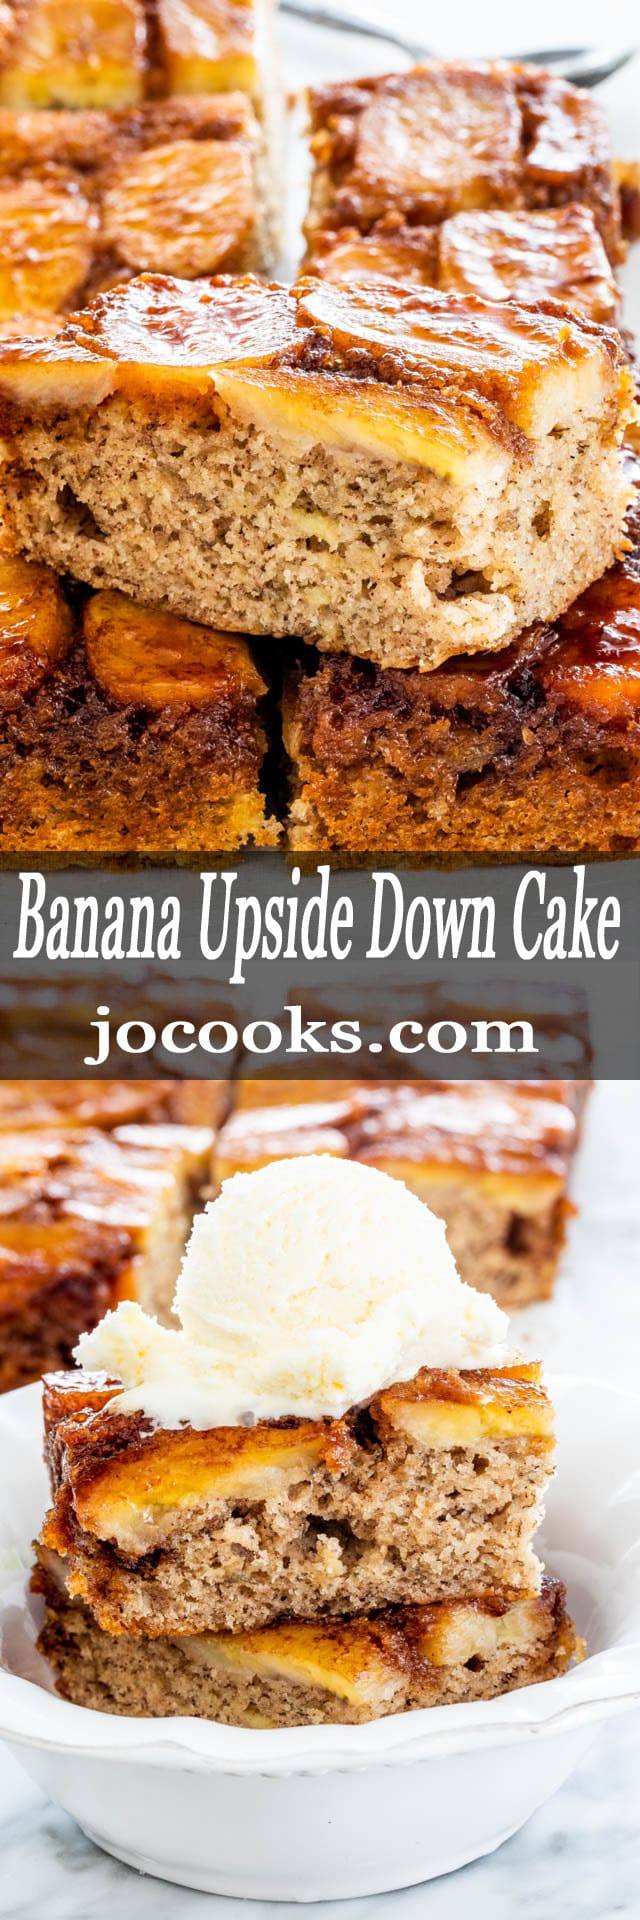 banana upside down cake